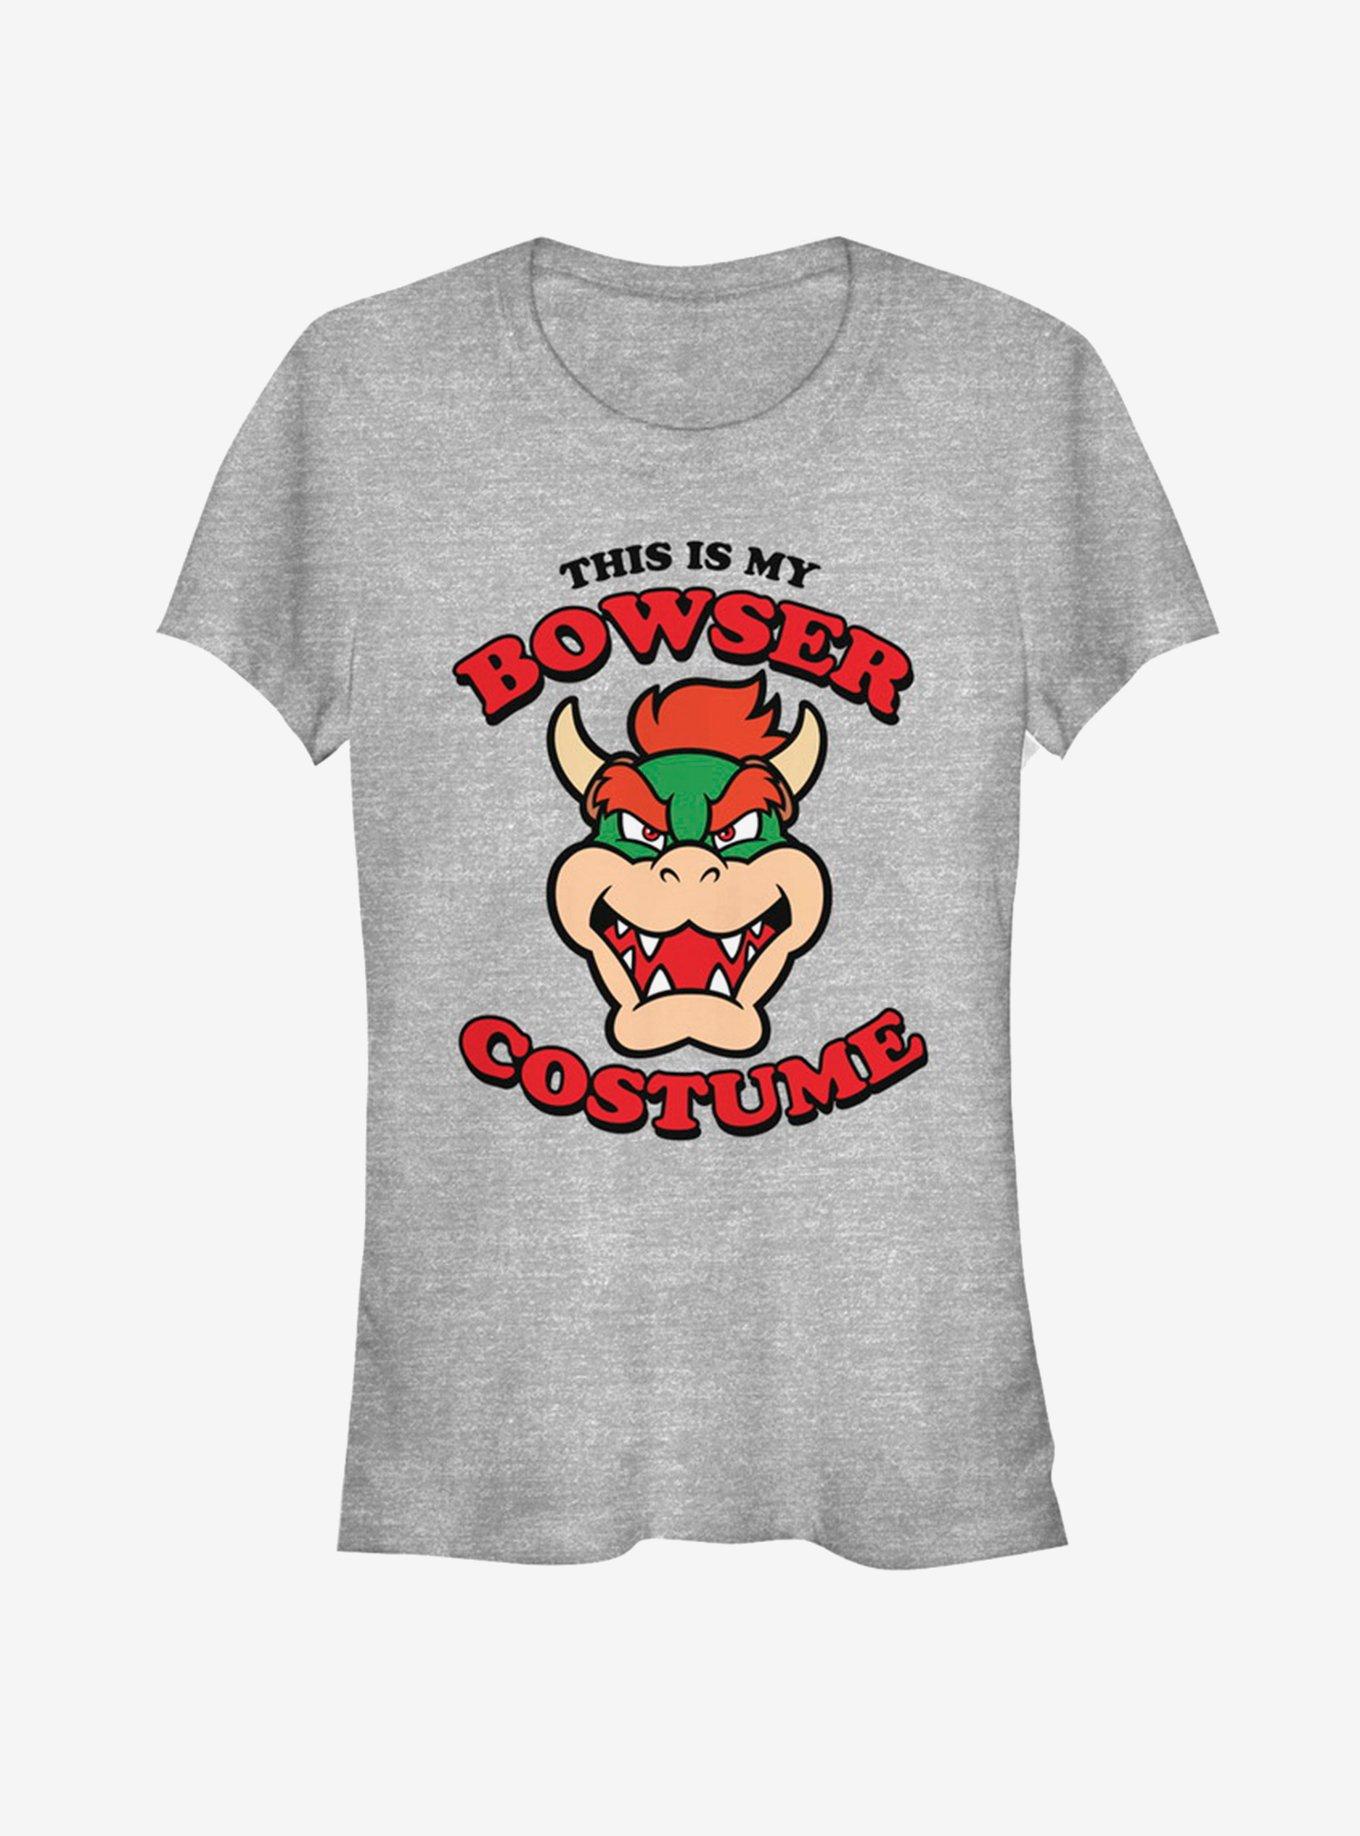 Nintendo Bowser Costume Girls T-Shirt, ATH HTR, hi-res